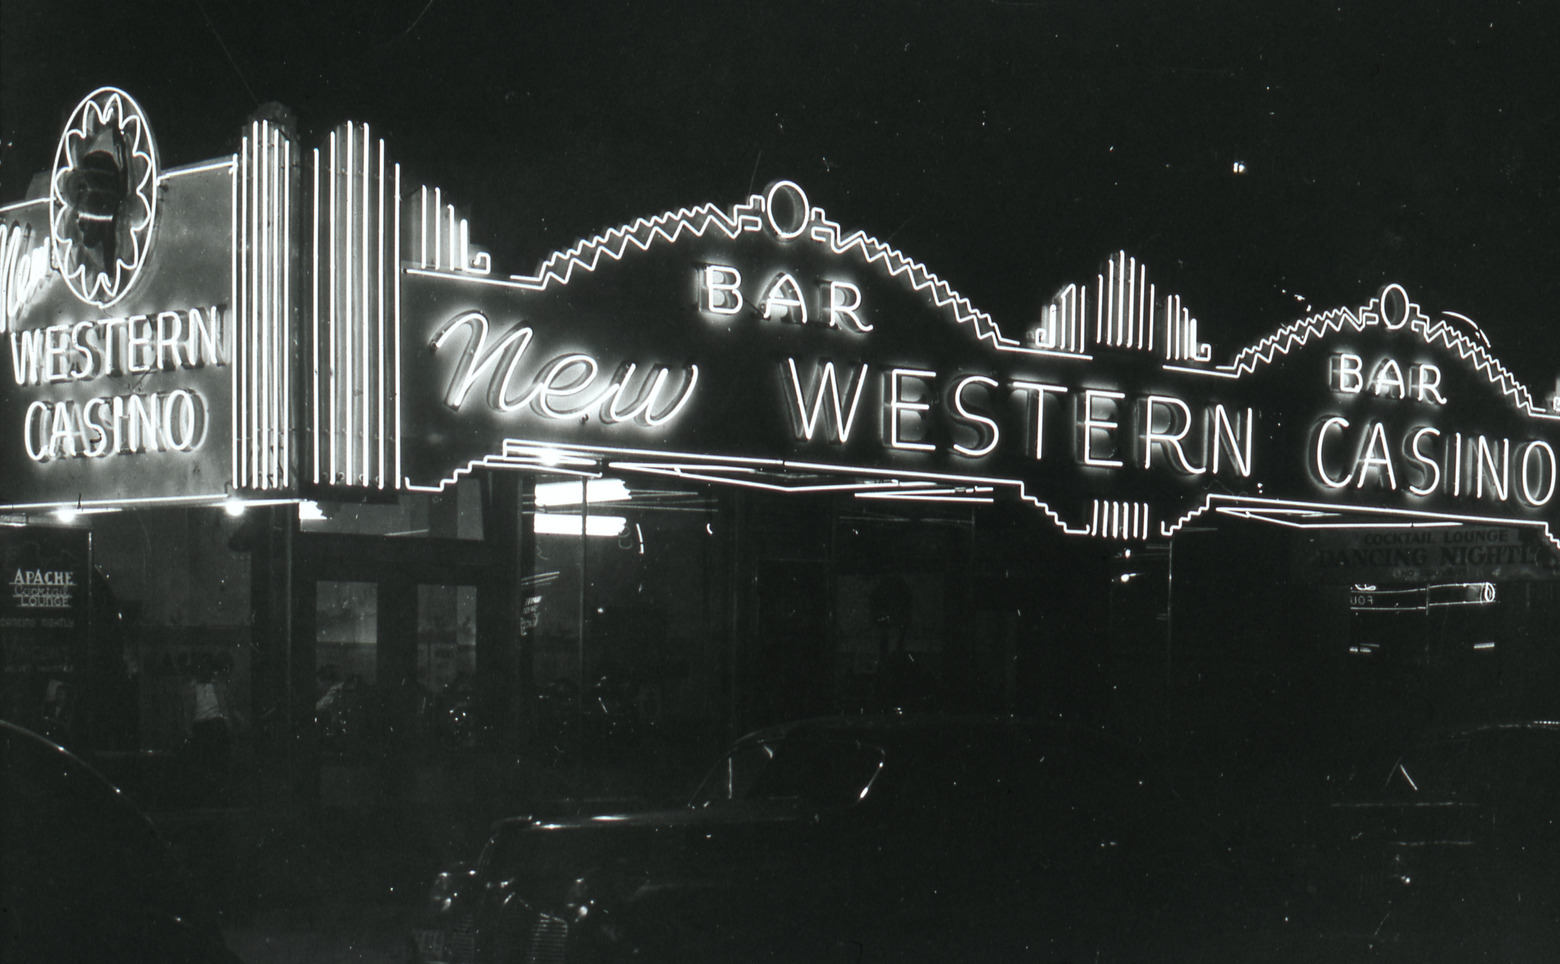 Neon signs along Fremont Street, Las Vegas, Nevada: photographic print